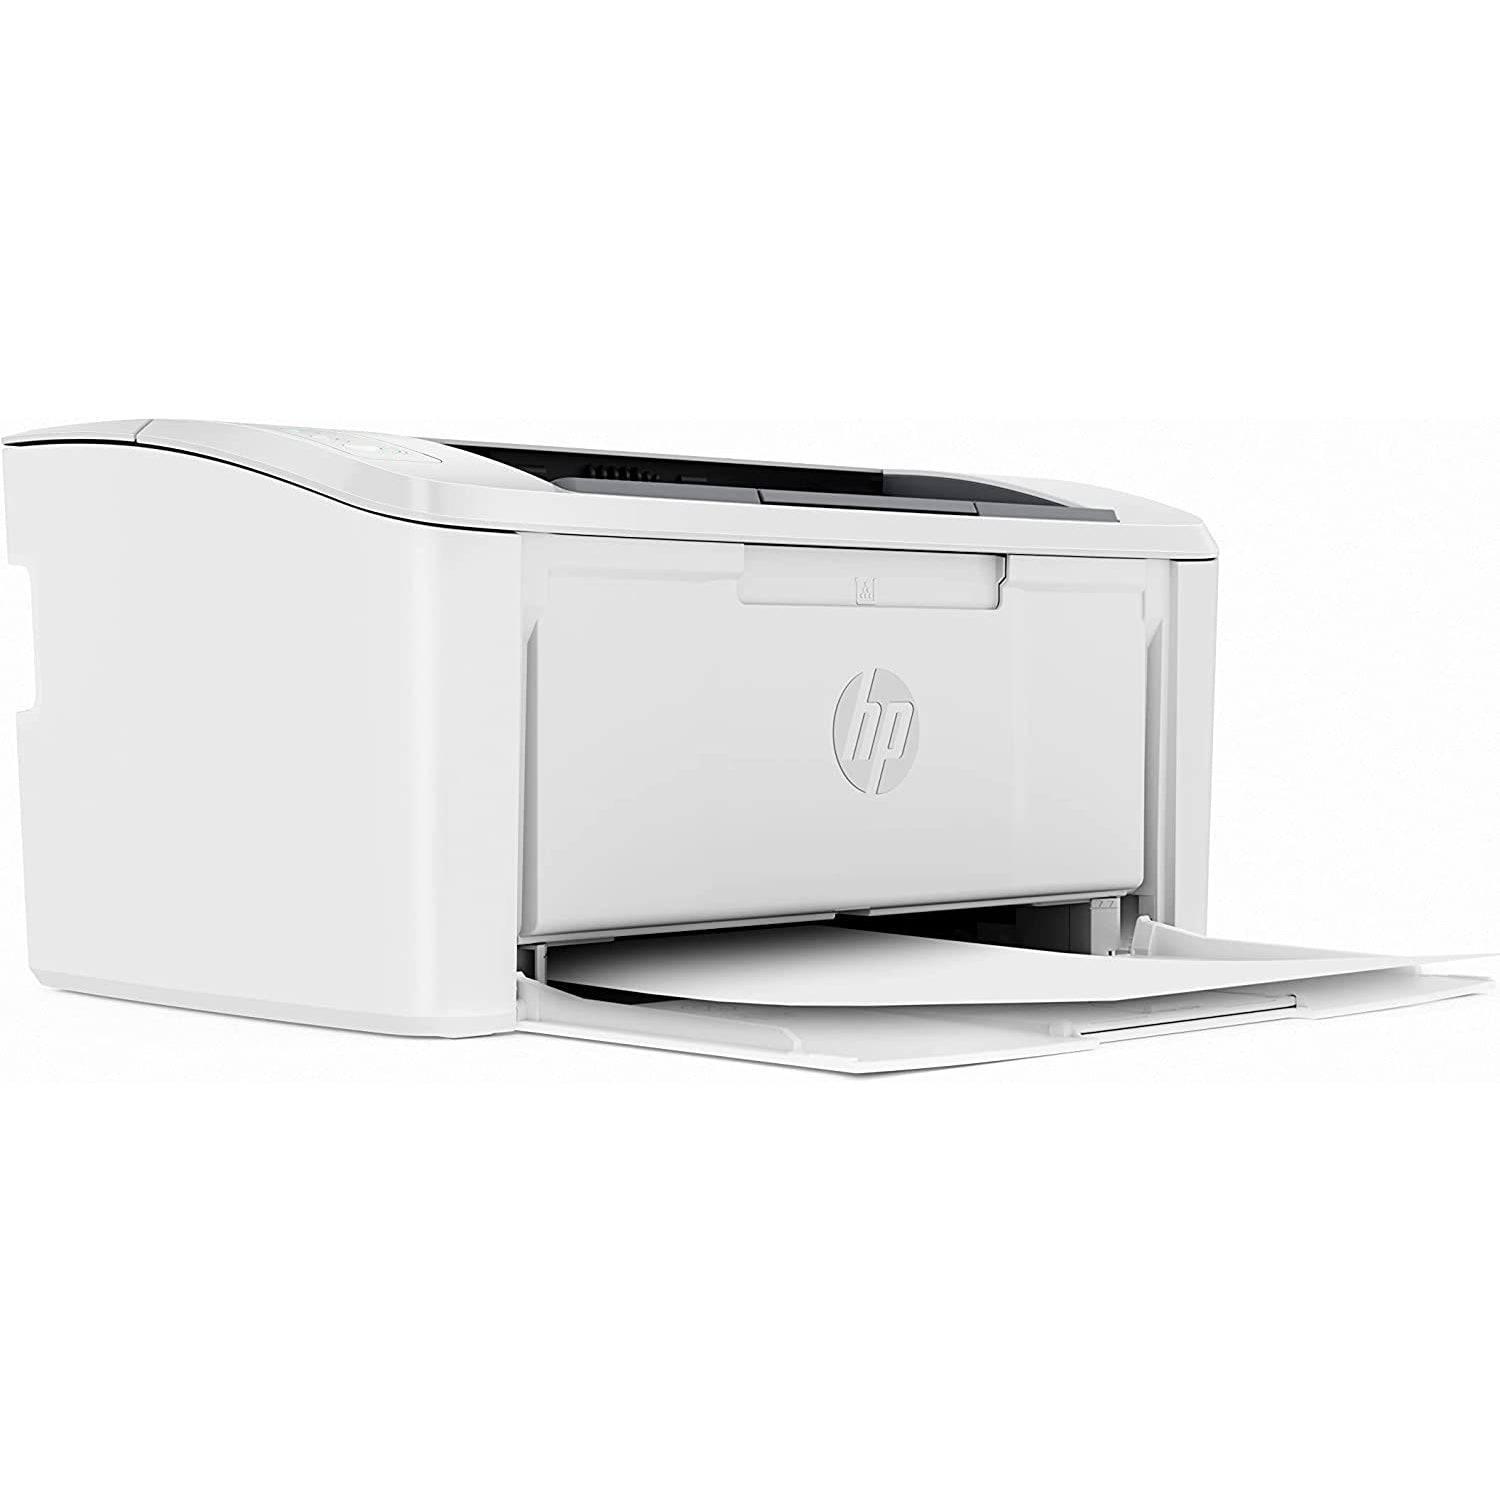 HP LaserJet M110we Wireless Mono Printer - Refurbished Pristine